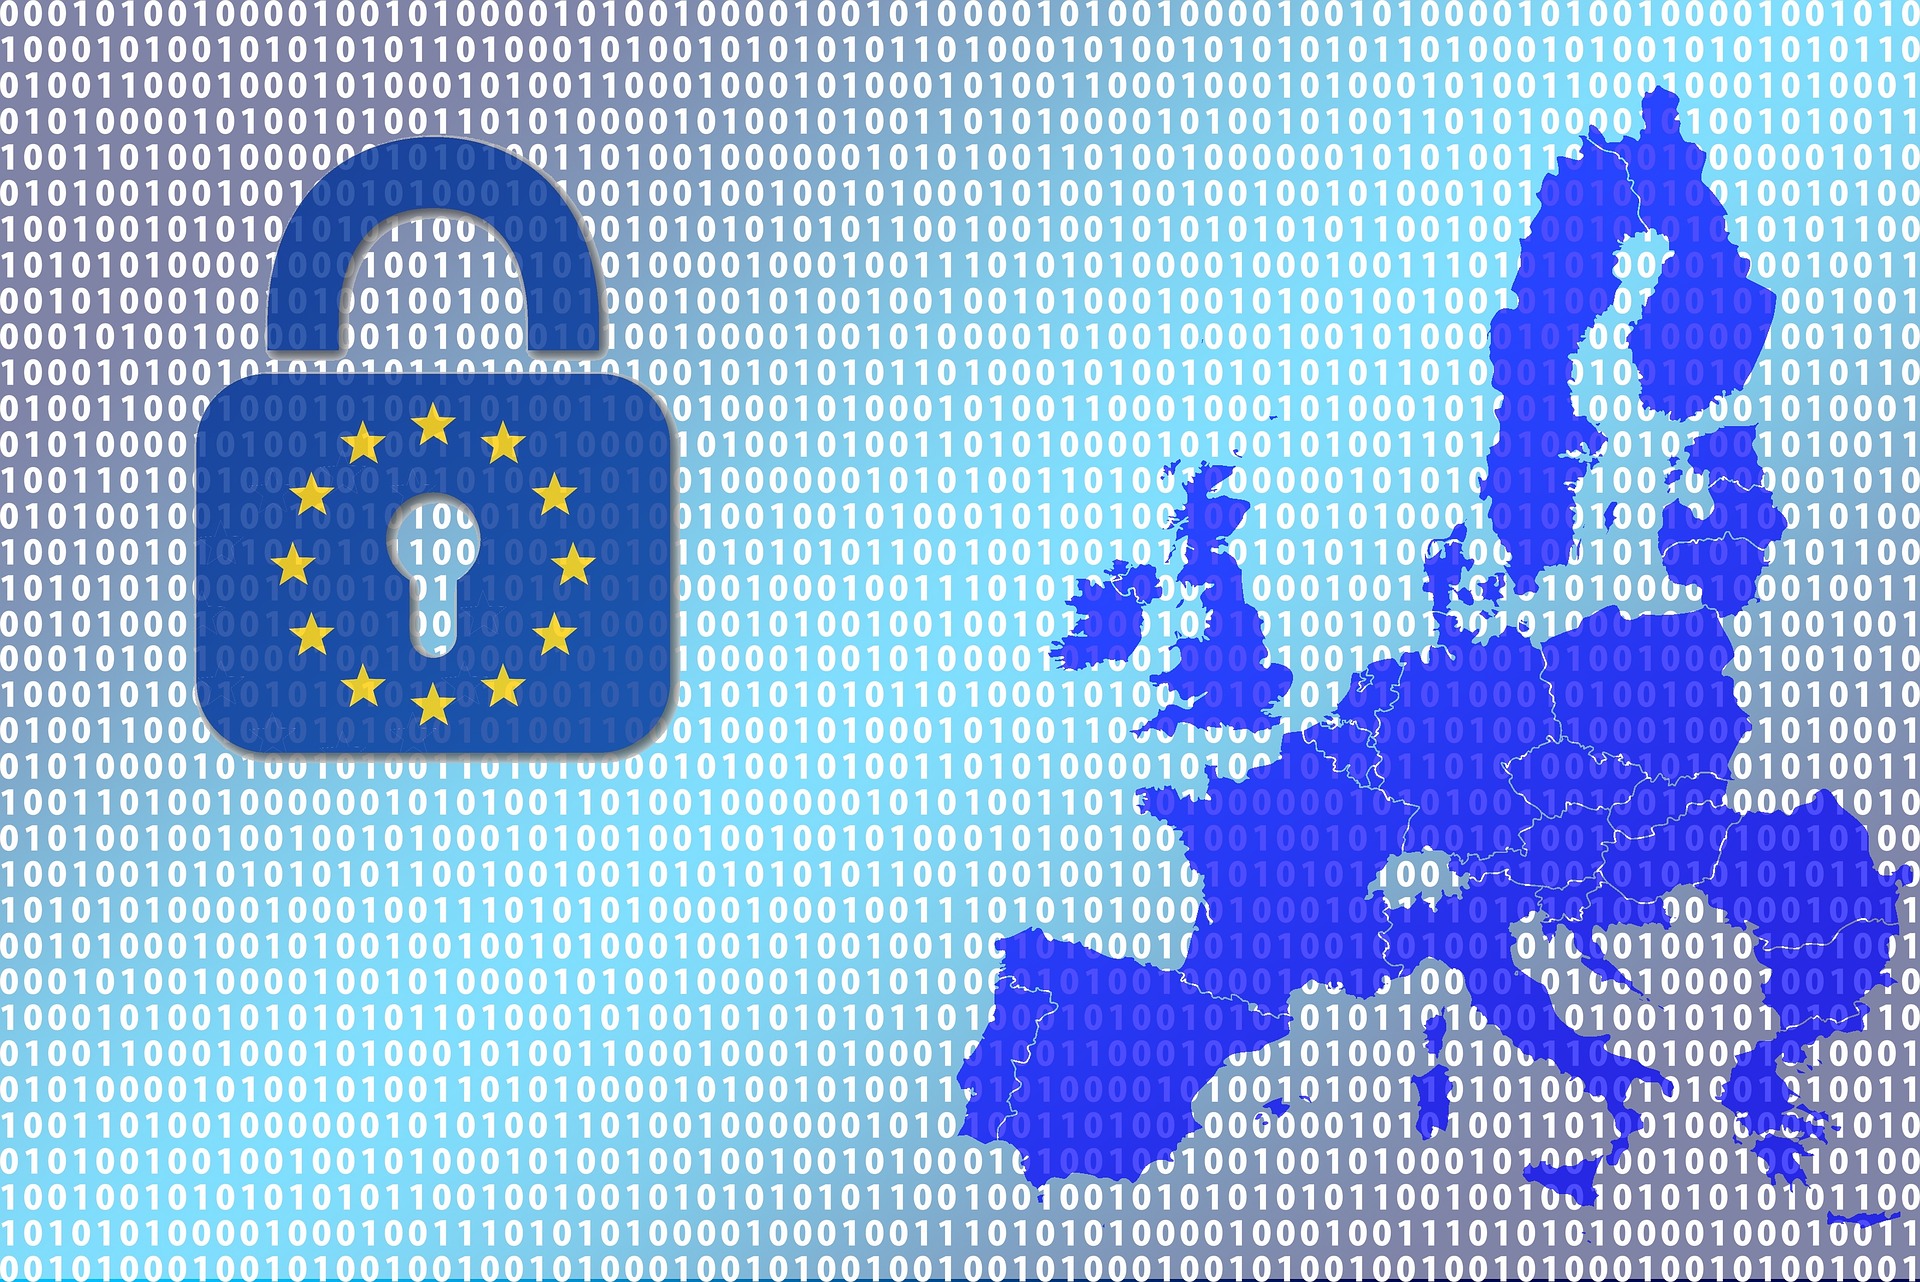 Spain Advocates Encryption Ban, Leaked EU Document Reveals